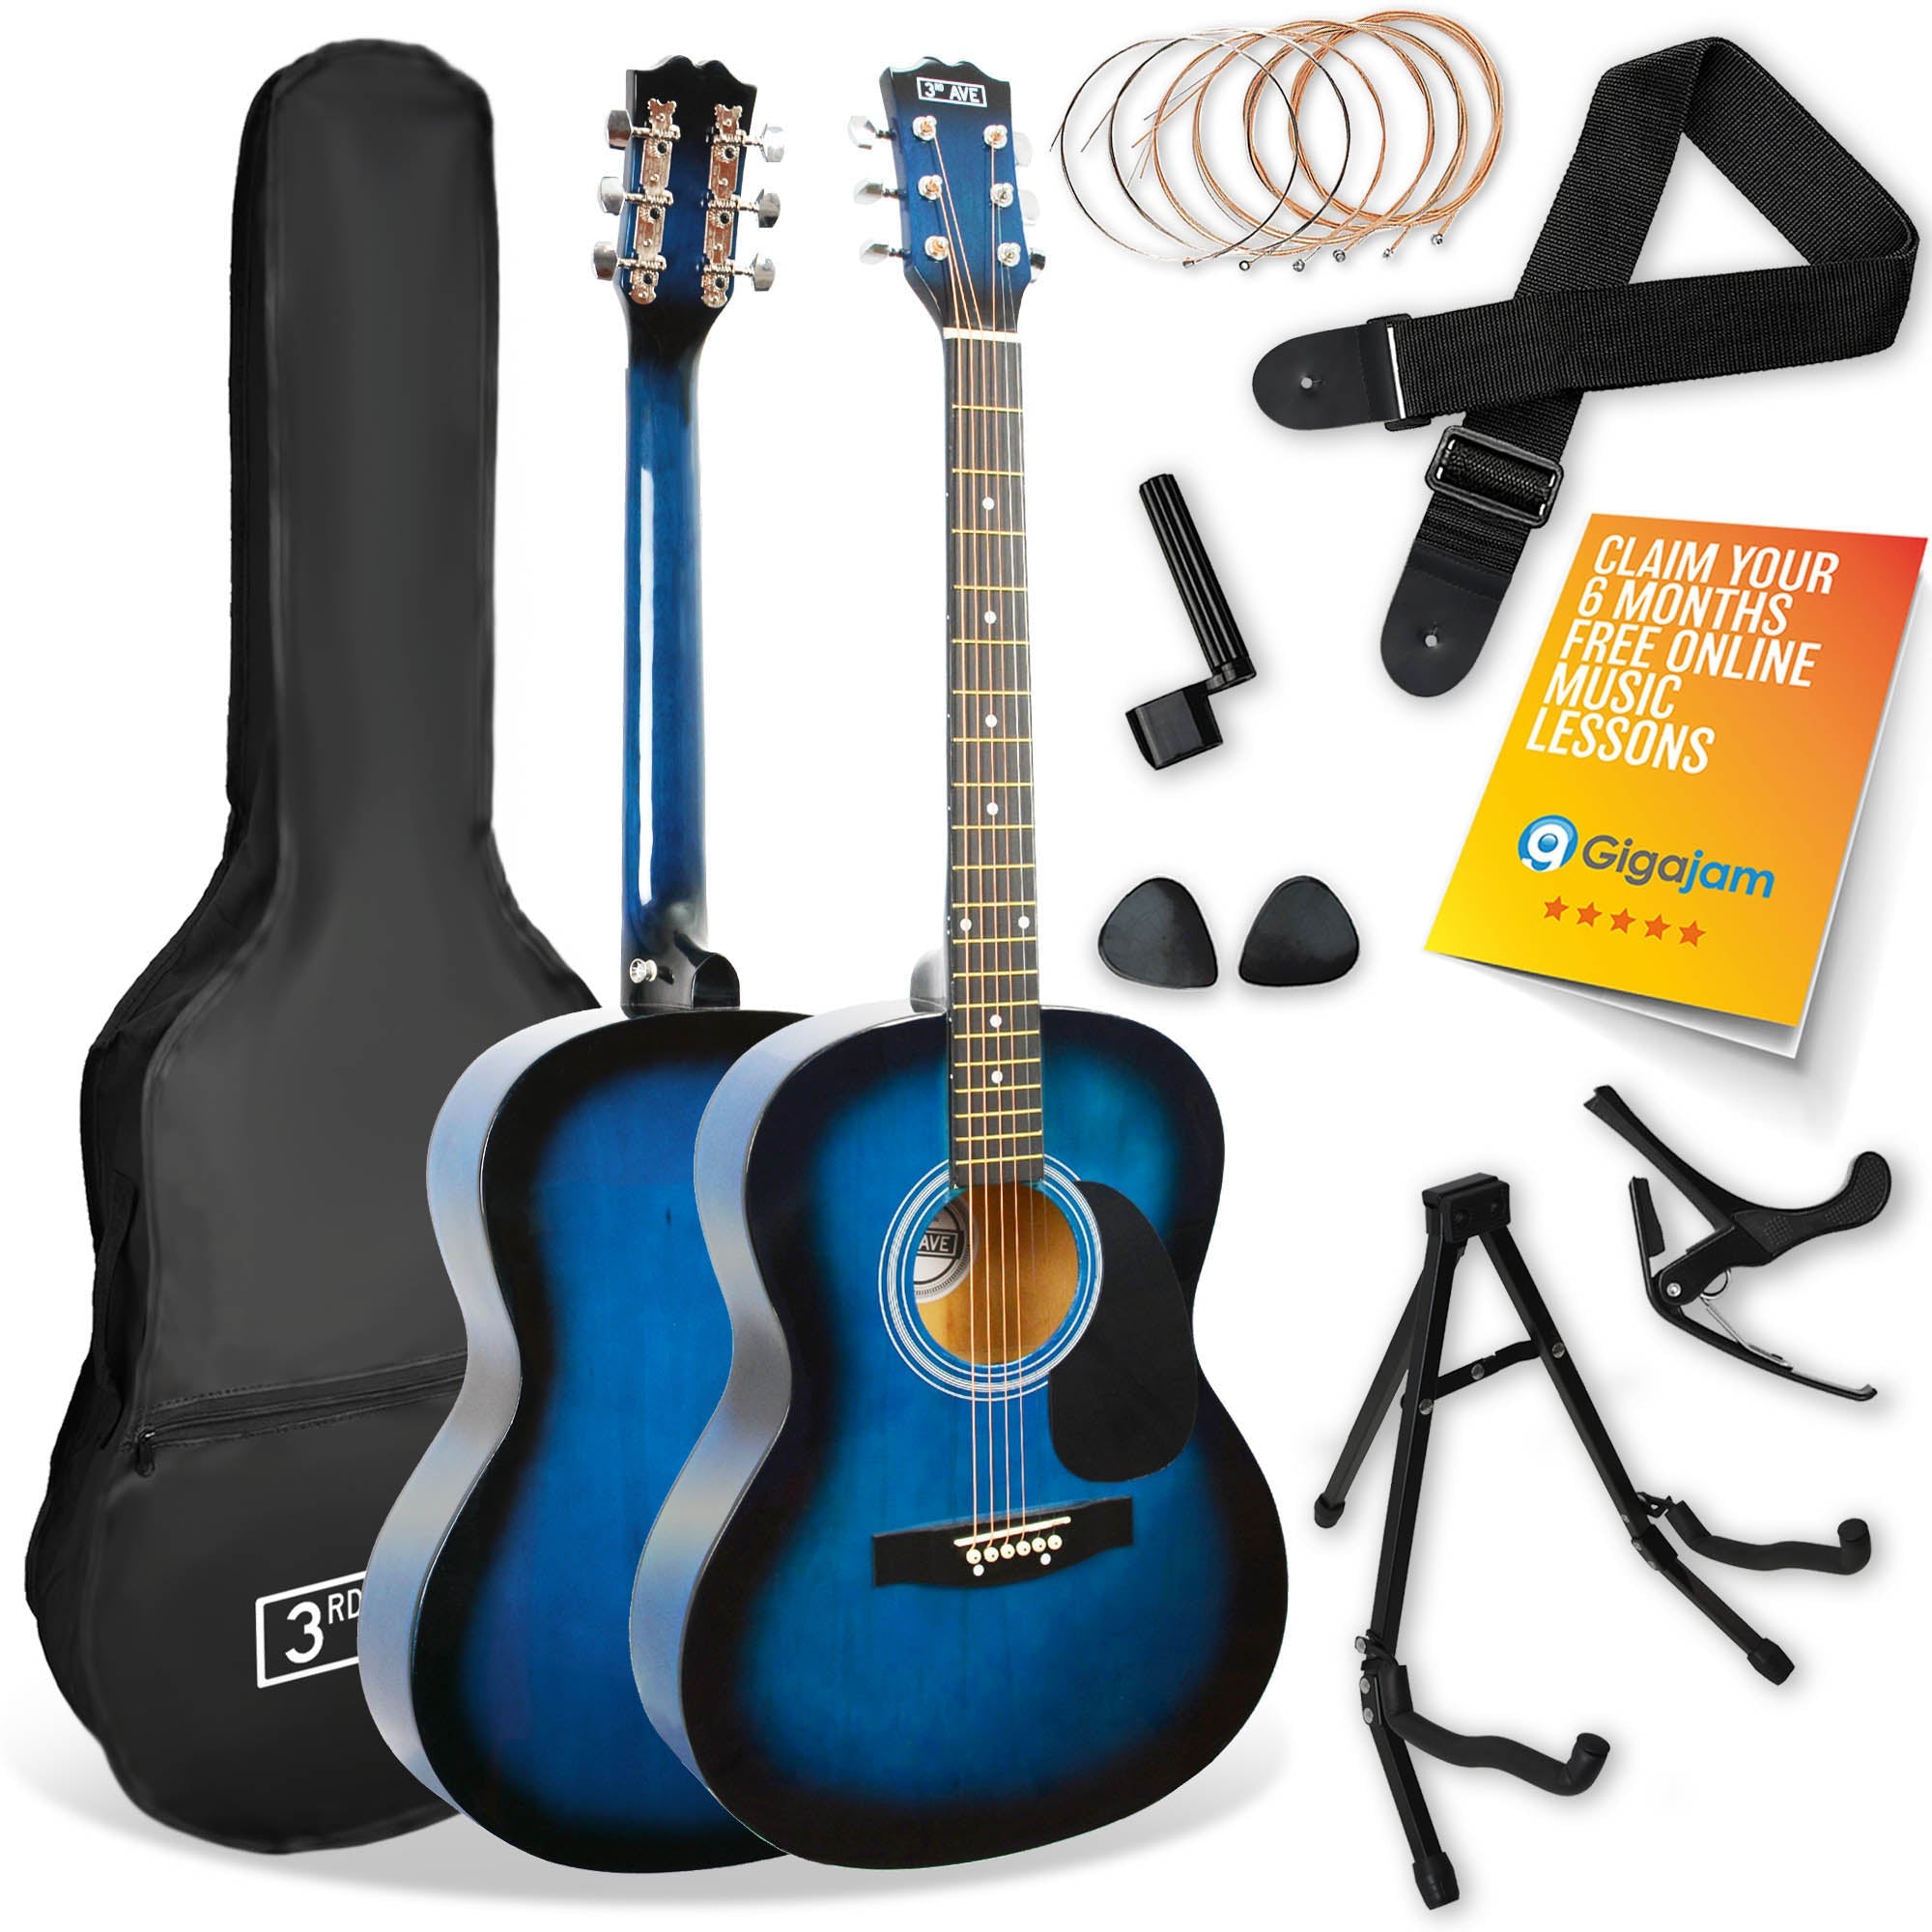 3rd Avenue Full Size Acoustic Guitar Premium Pack